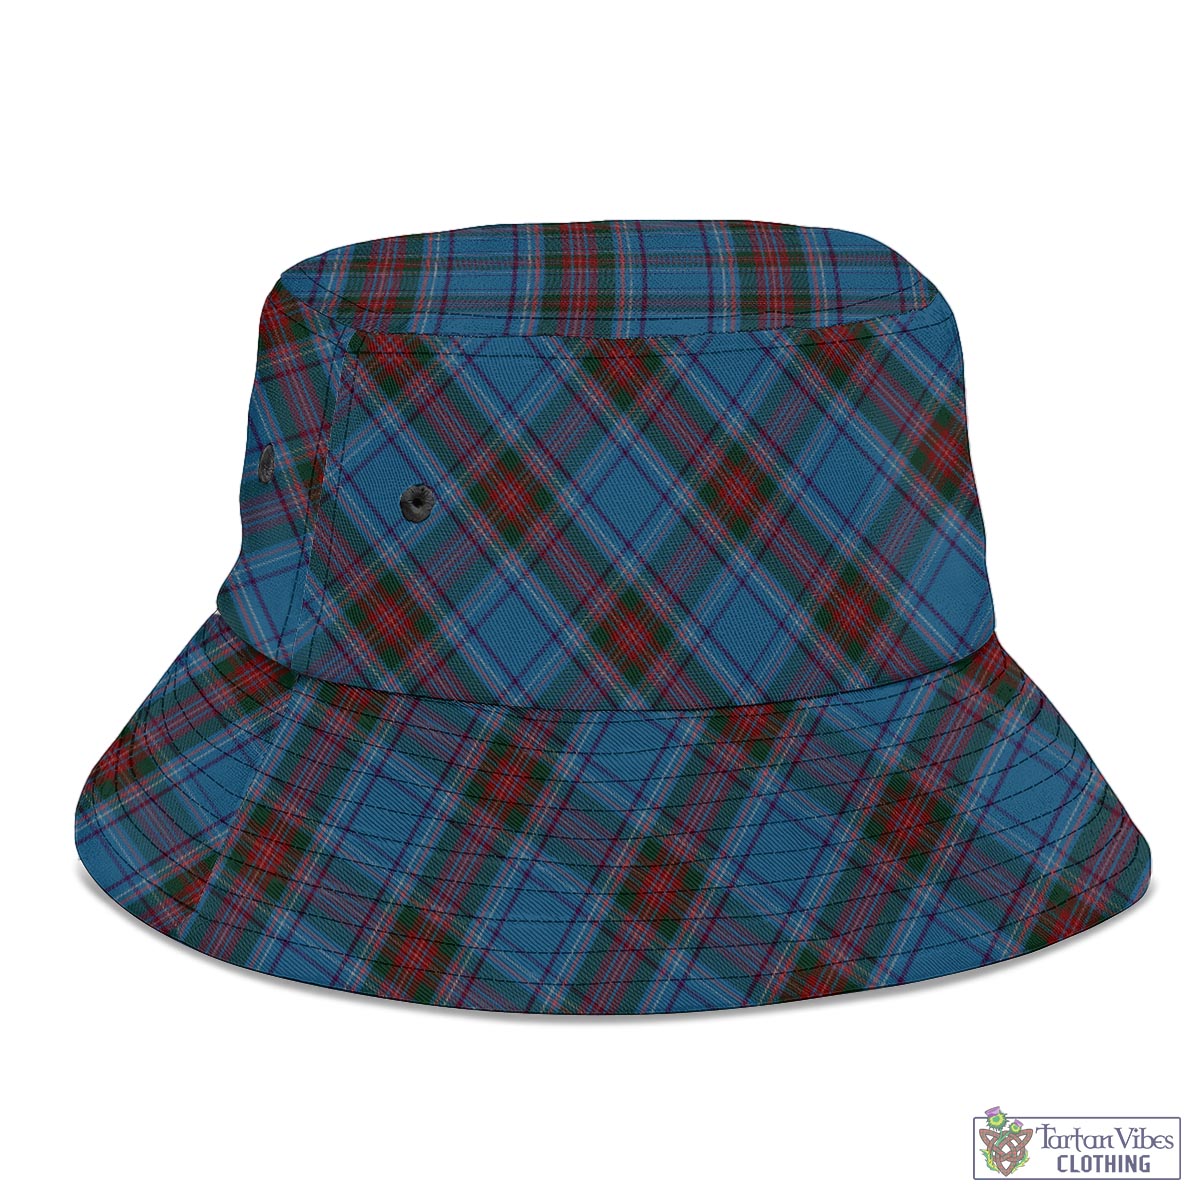 Tartan Vibes Clothing Louth County Ireland Tartan Bucket Hat